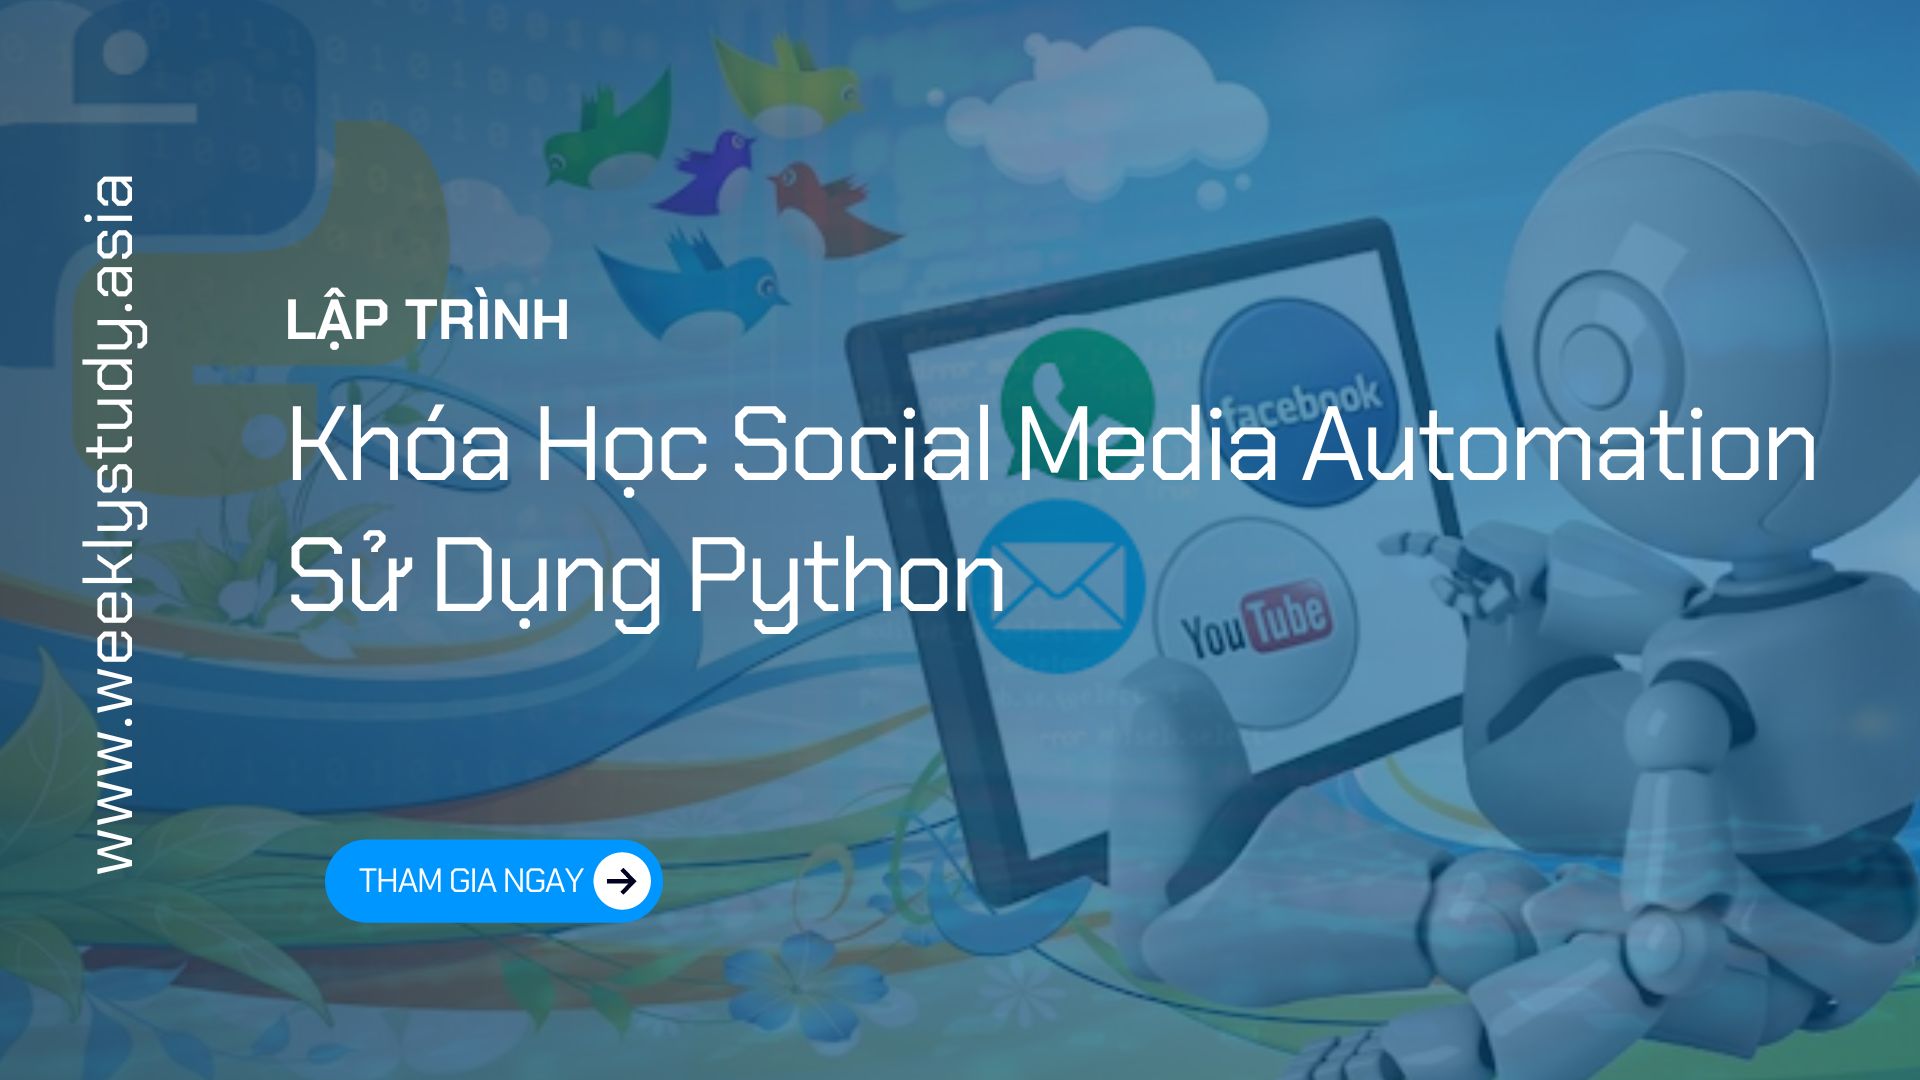 khoa-hoc-social-media-automation-su-dung-python-ma-7643a